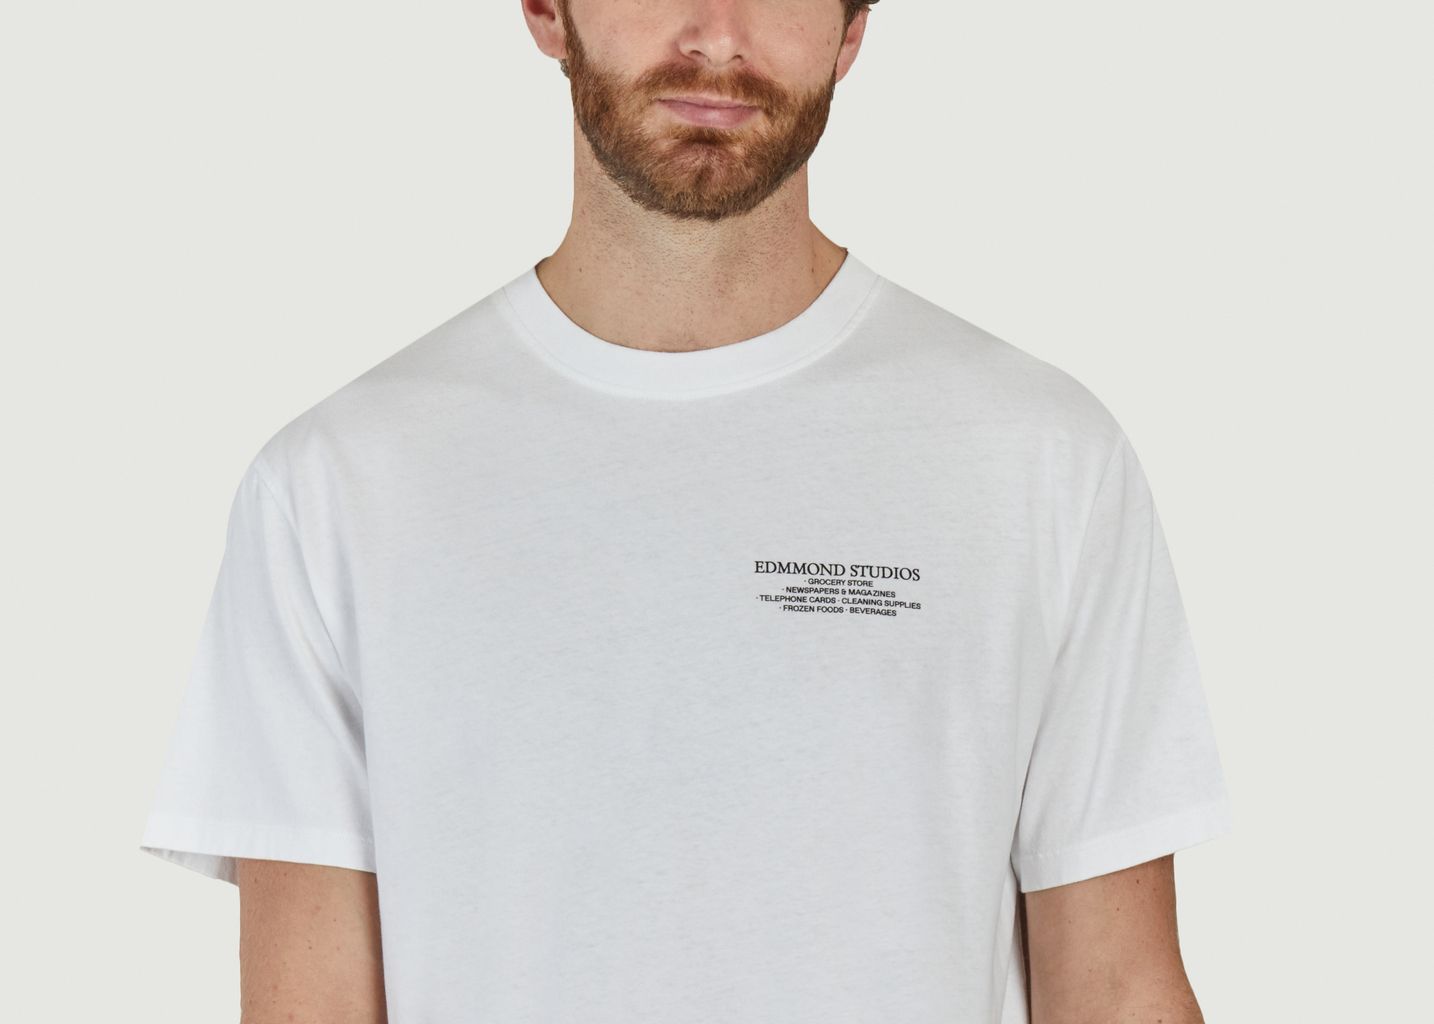 Mini Market T-shirt, - Edmmond Studios